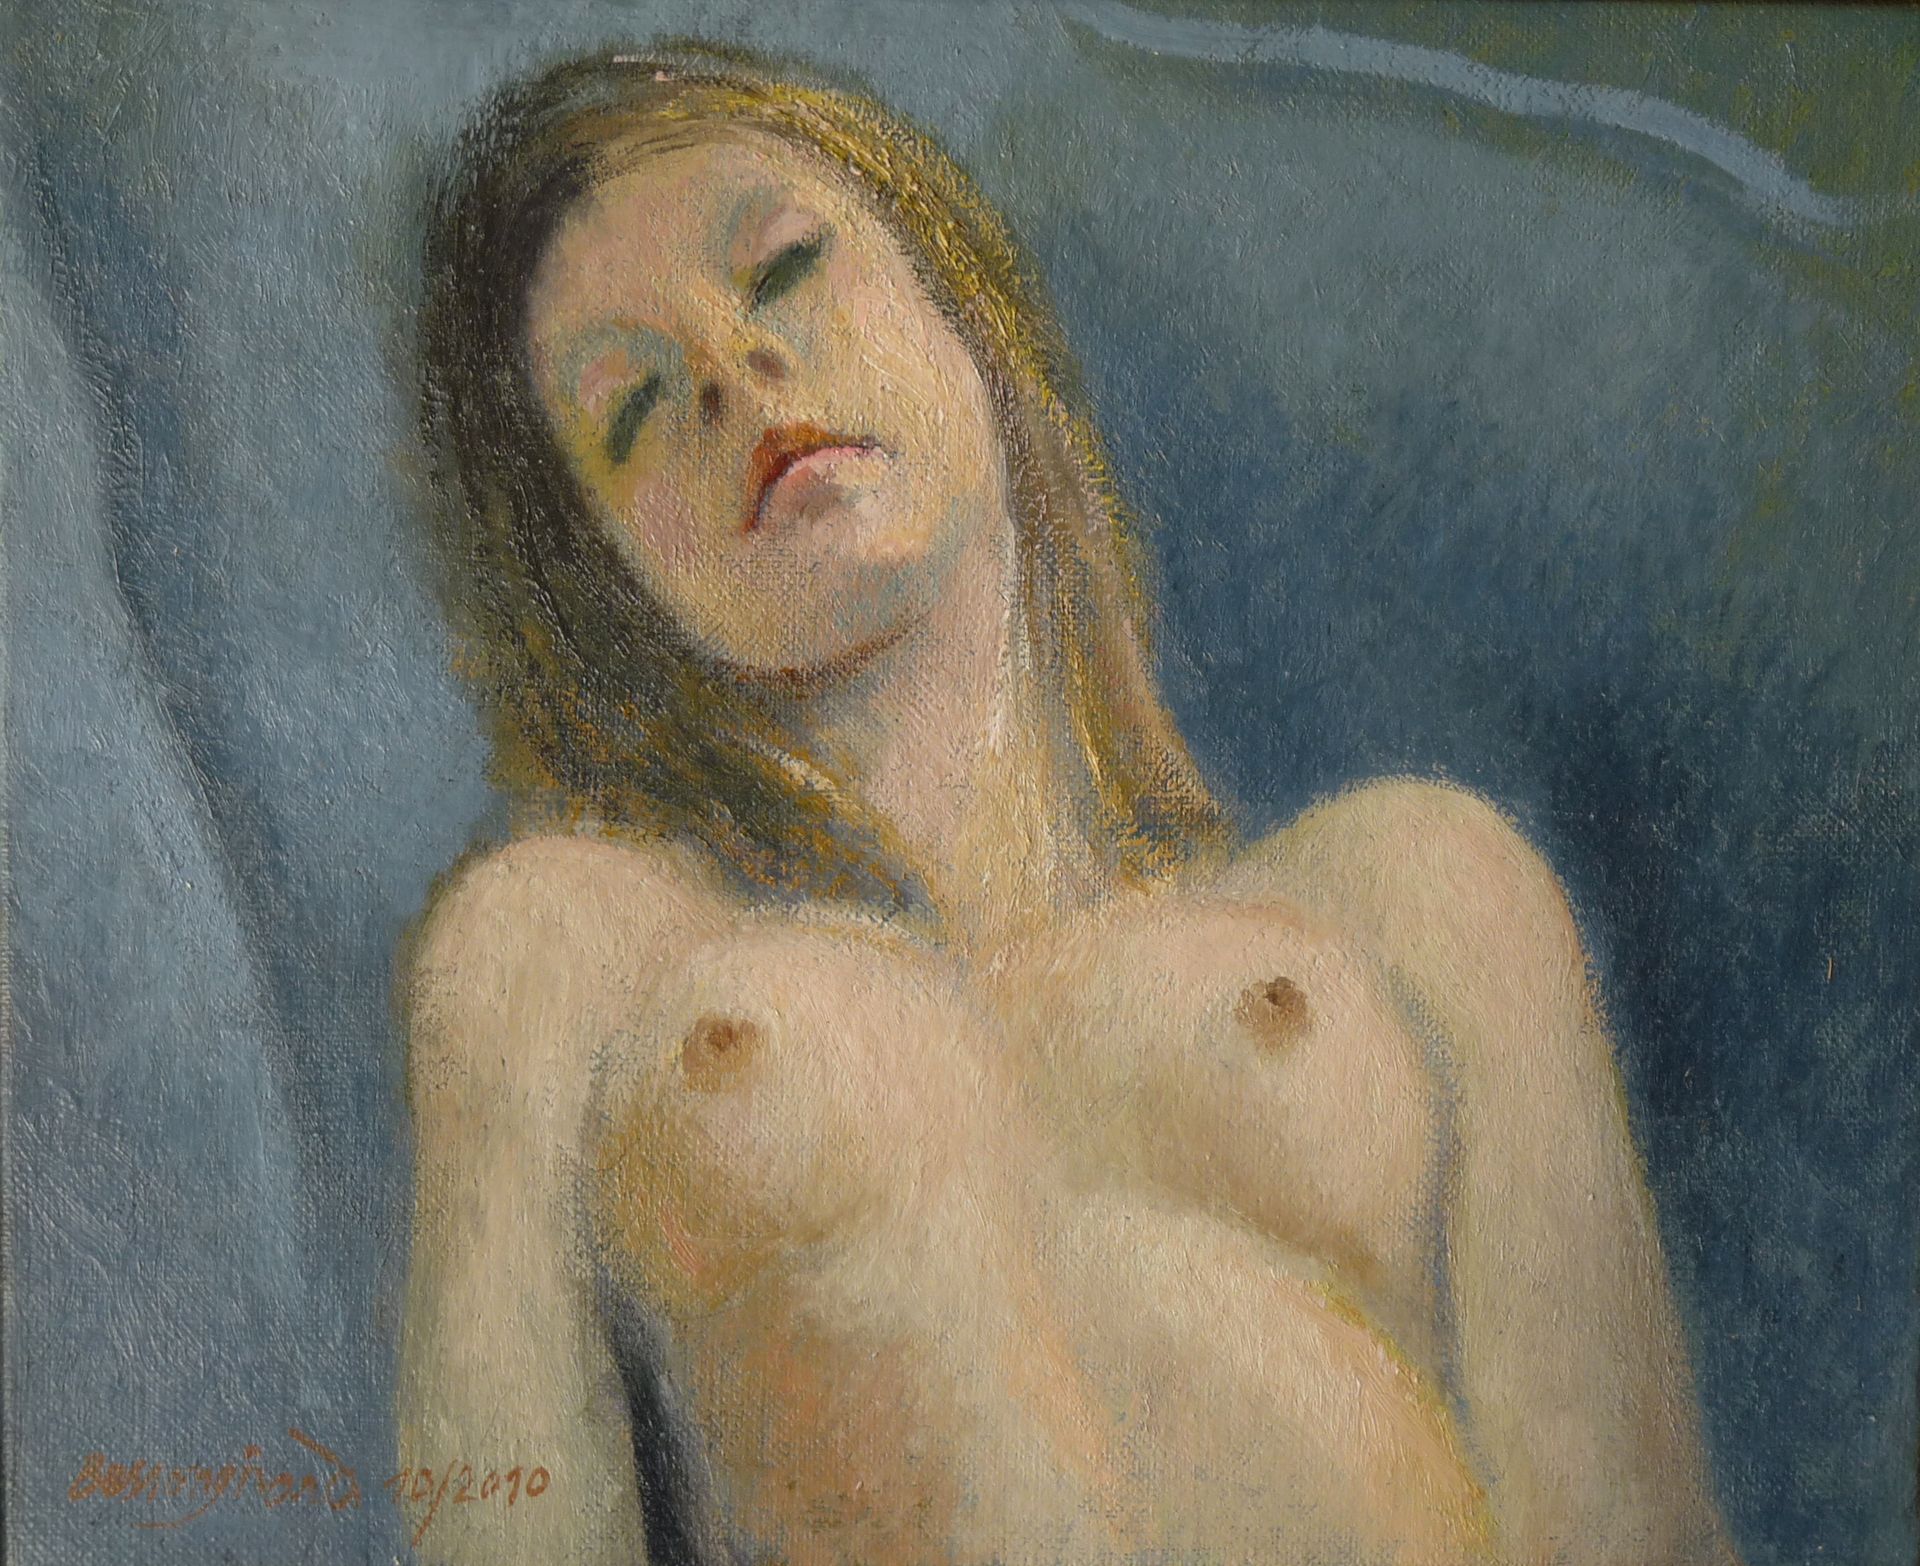 Null 让-克劳德-贝松-吉拉尔 (1938-2021)

无题20, 2010

布面油画，左下方有签名和日期10/2010

22 x 27 cm